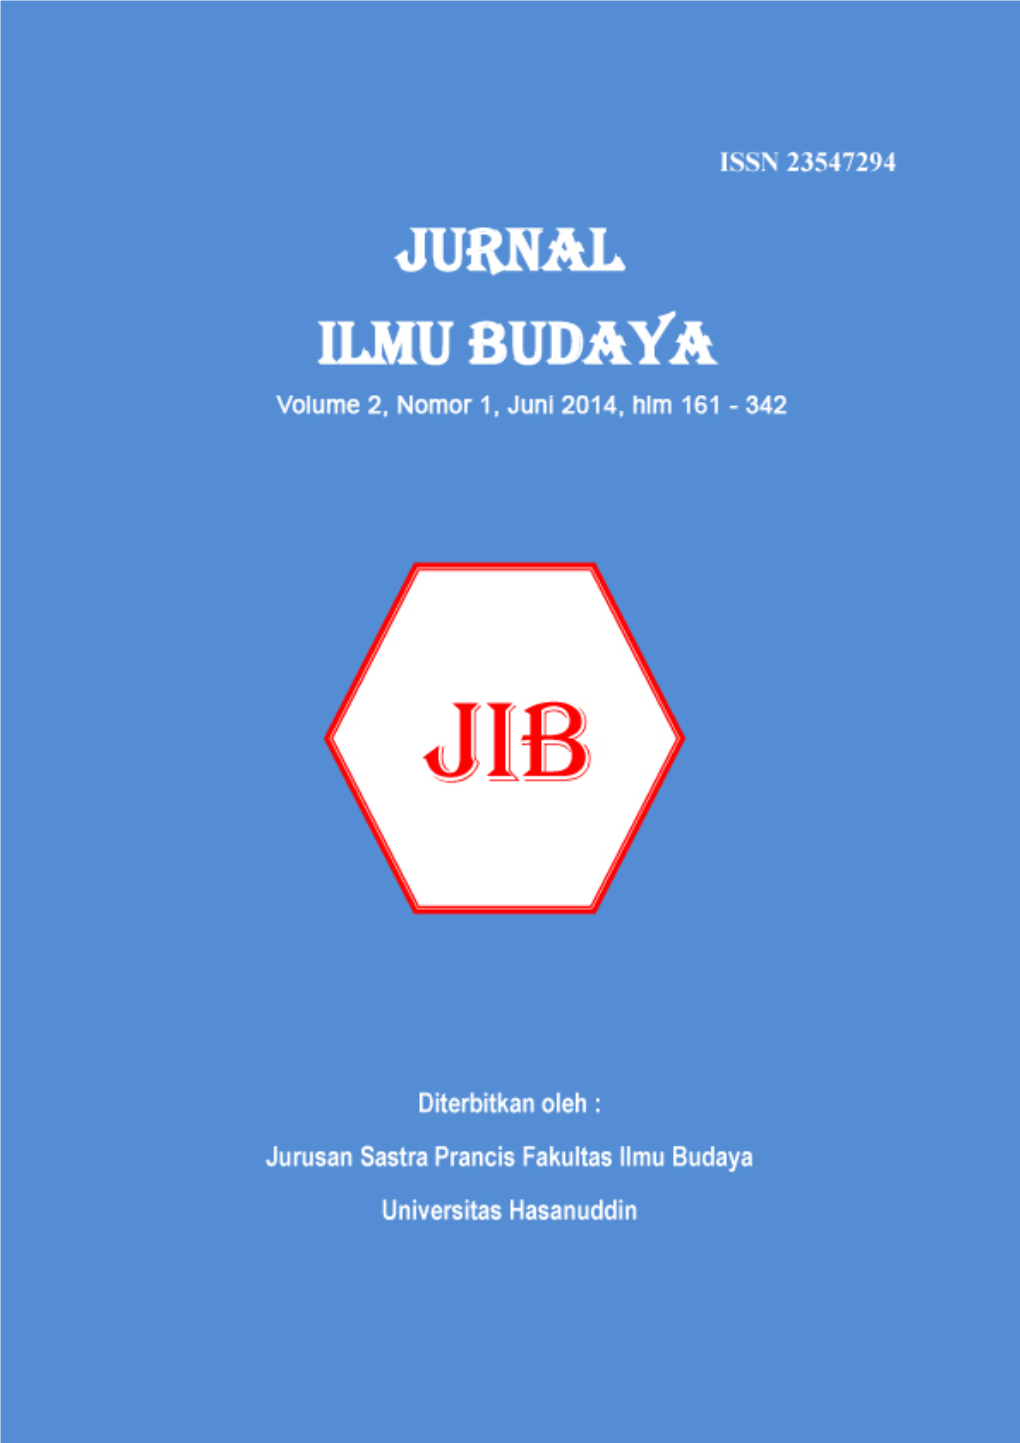 JURNAL ILMU BUDAYA ISSN 2354 -7294 Volume 2, Nomor 1, Juni 2014